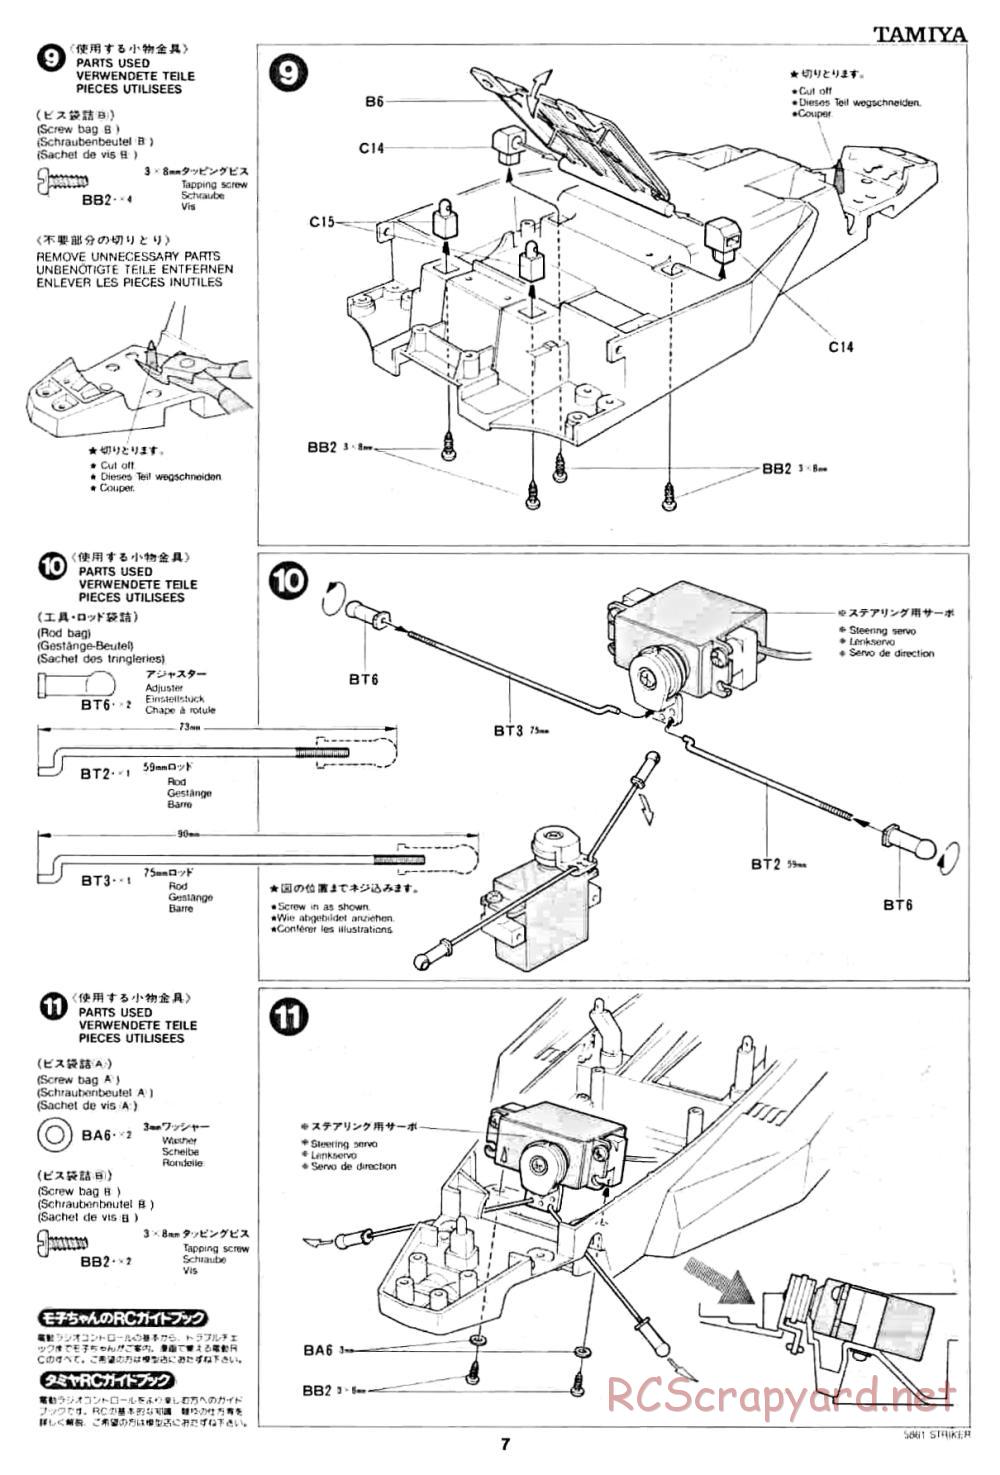 Tamiya - Striker - 58061 - Manual - Page 7